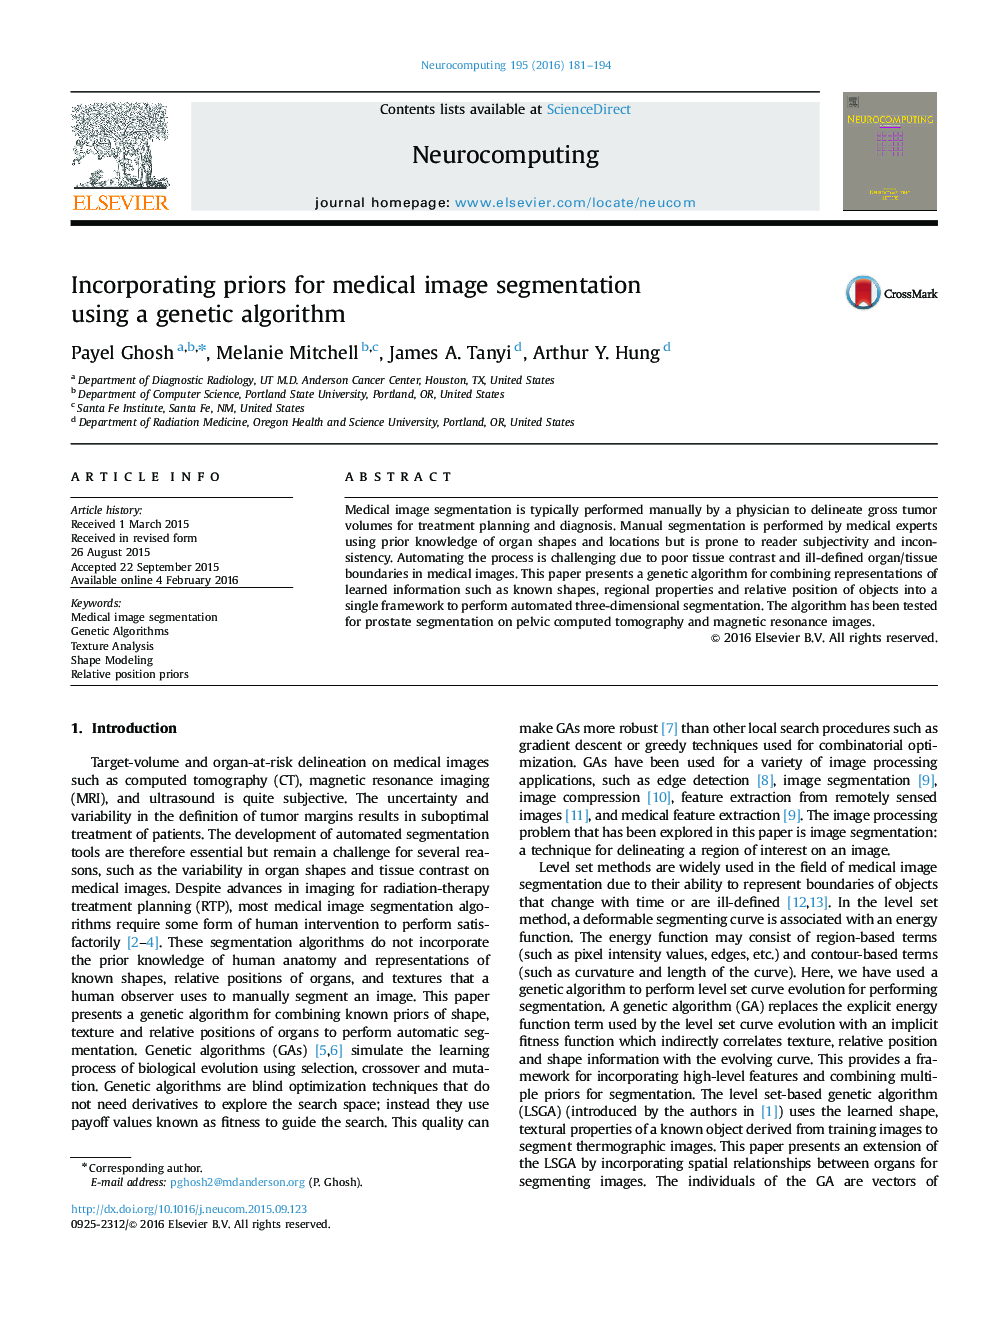 Incorporating priors for medical image segmentation using a genetic algorithm